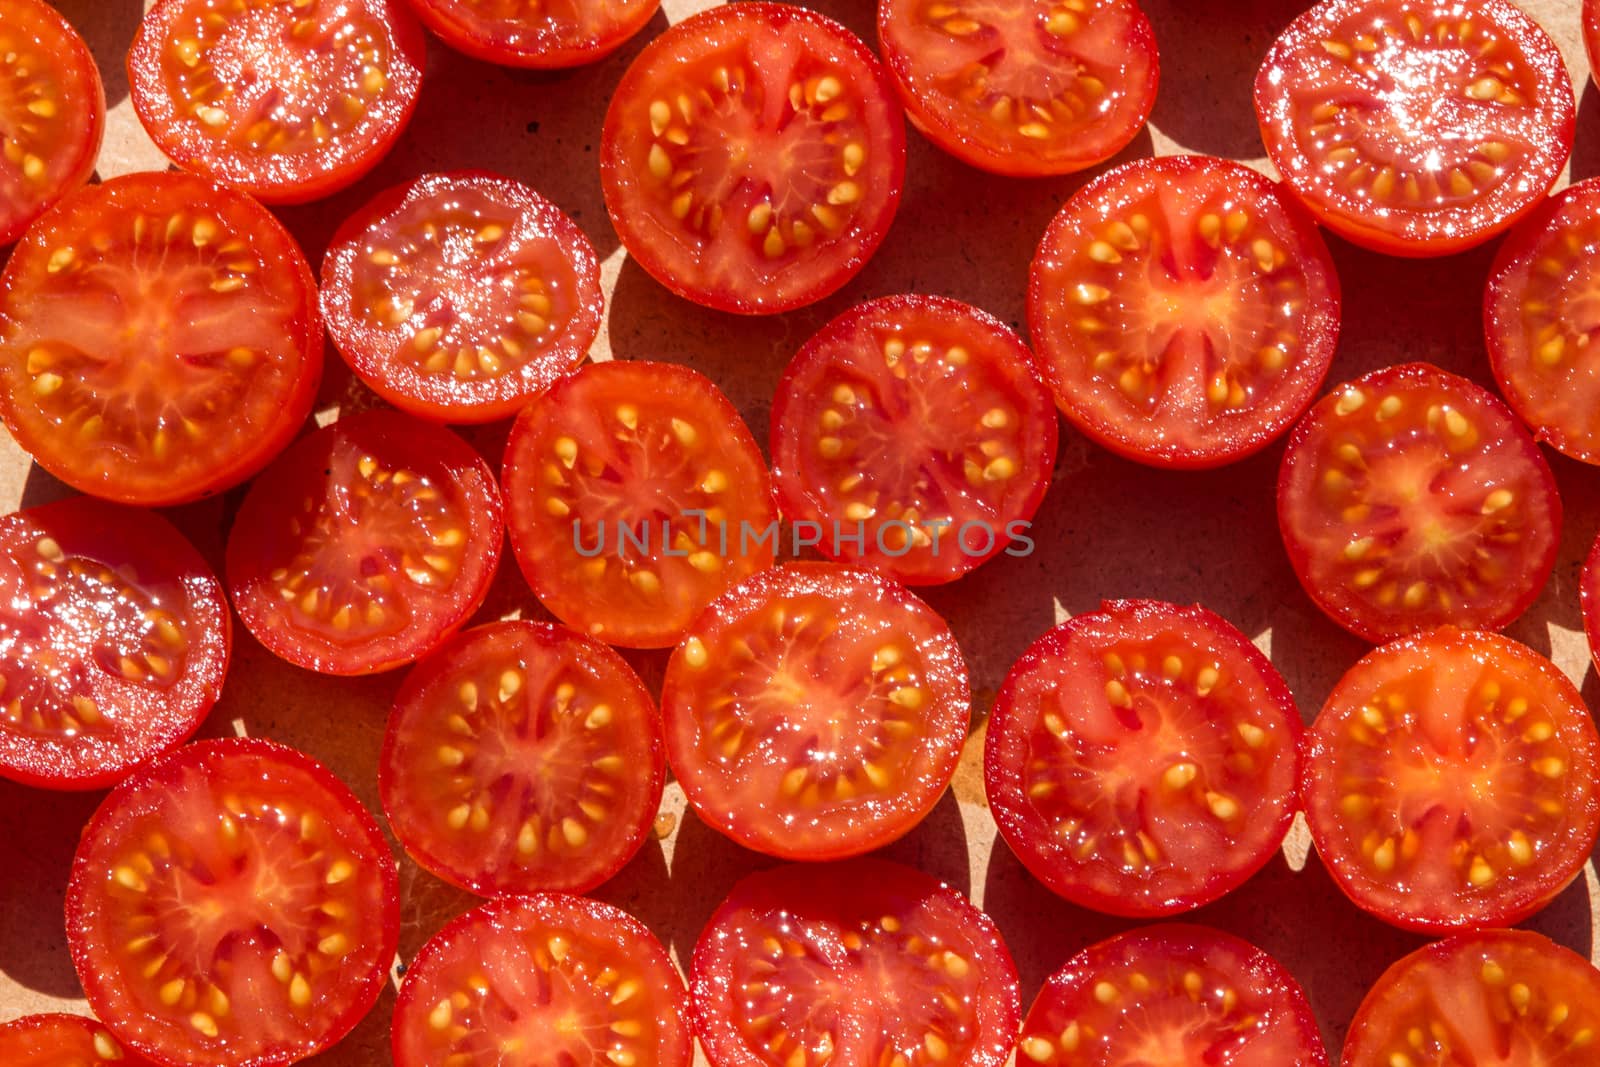 The Tomato fruit by alanstix64